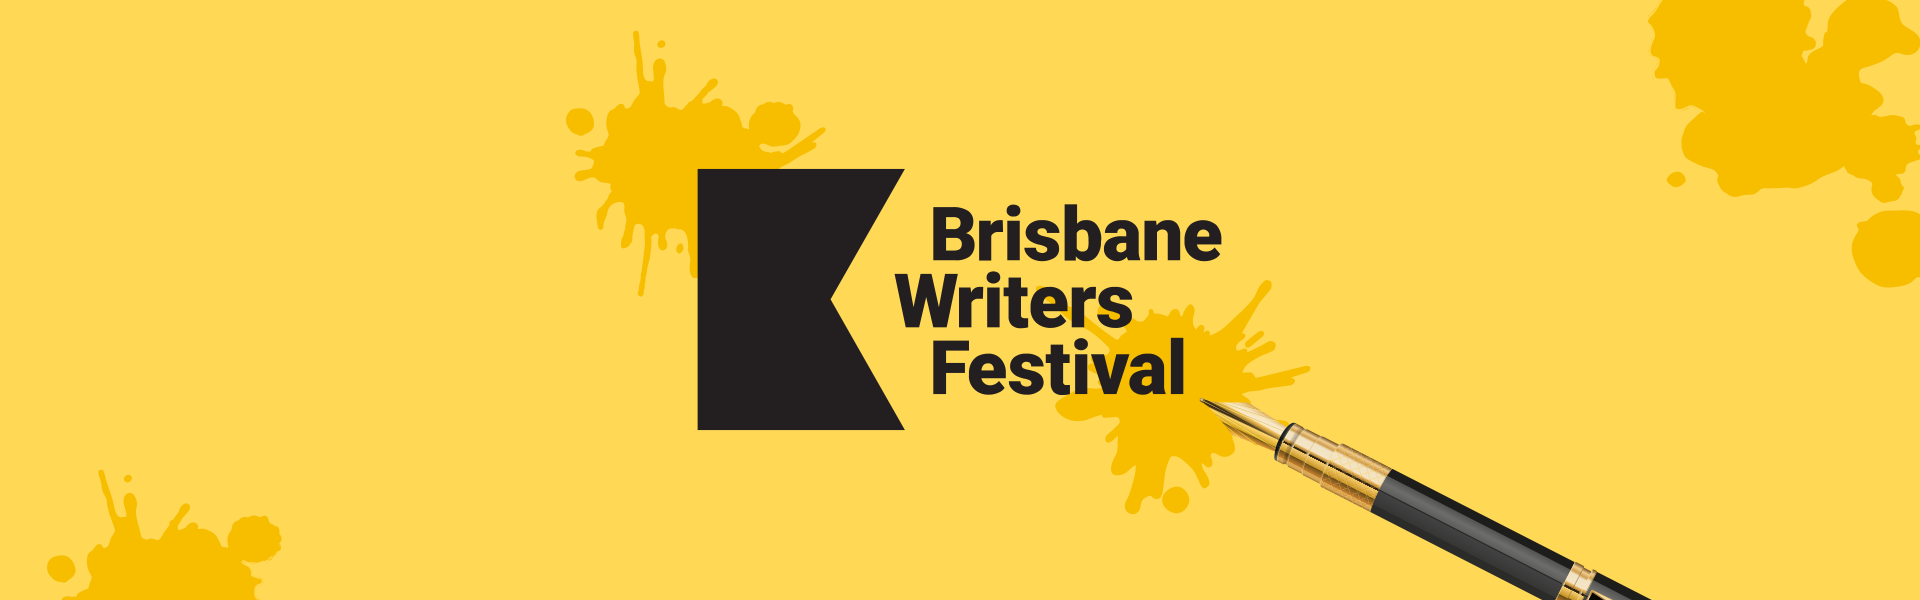 Brisbane Writers Festival logo in black on yellow background